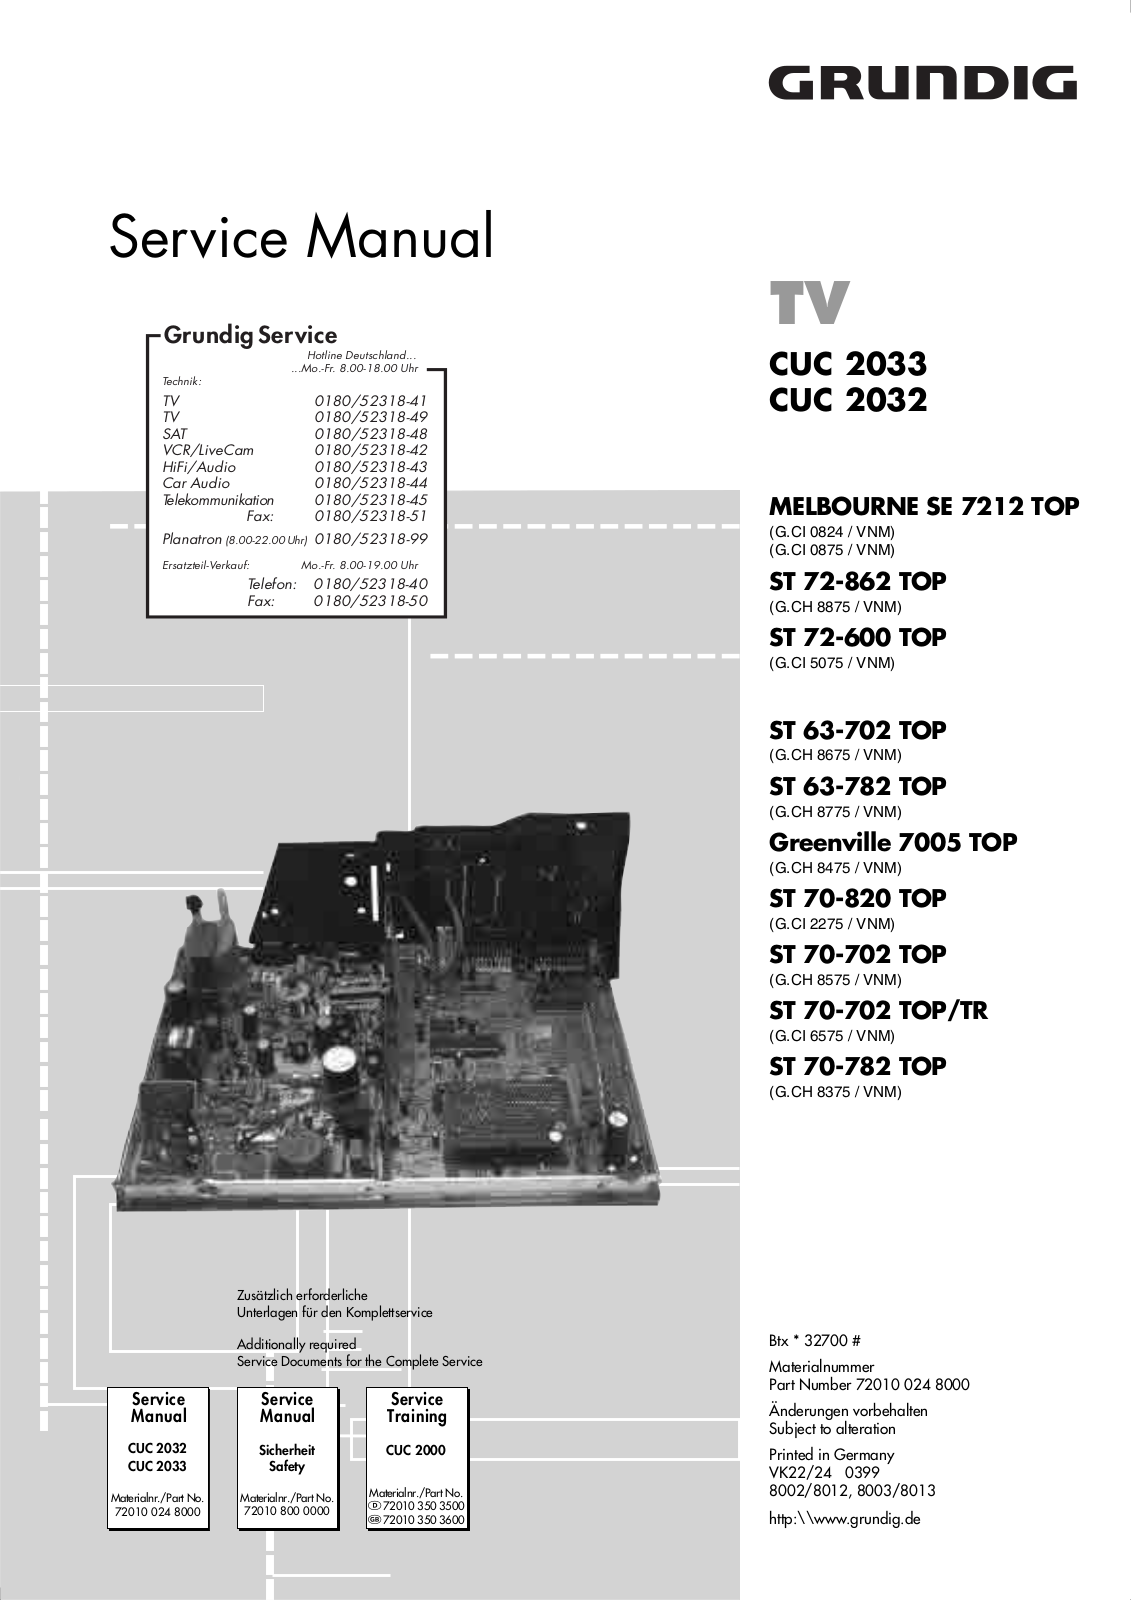 Grundig ST 70-782 TOP, ST 70-702 TOP, ST 70-820 TOP, ST 63-782 TOP, ST 63-702 TOP Service Manual